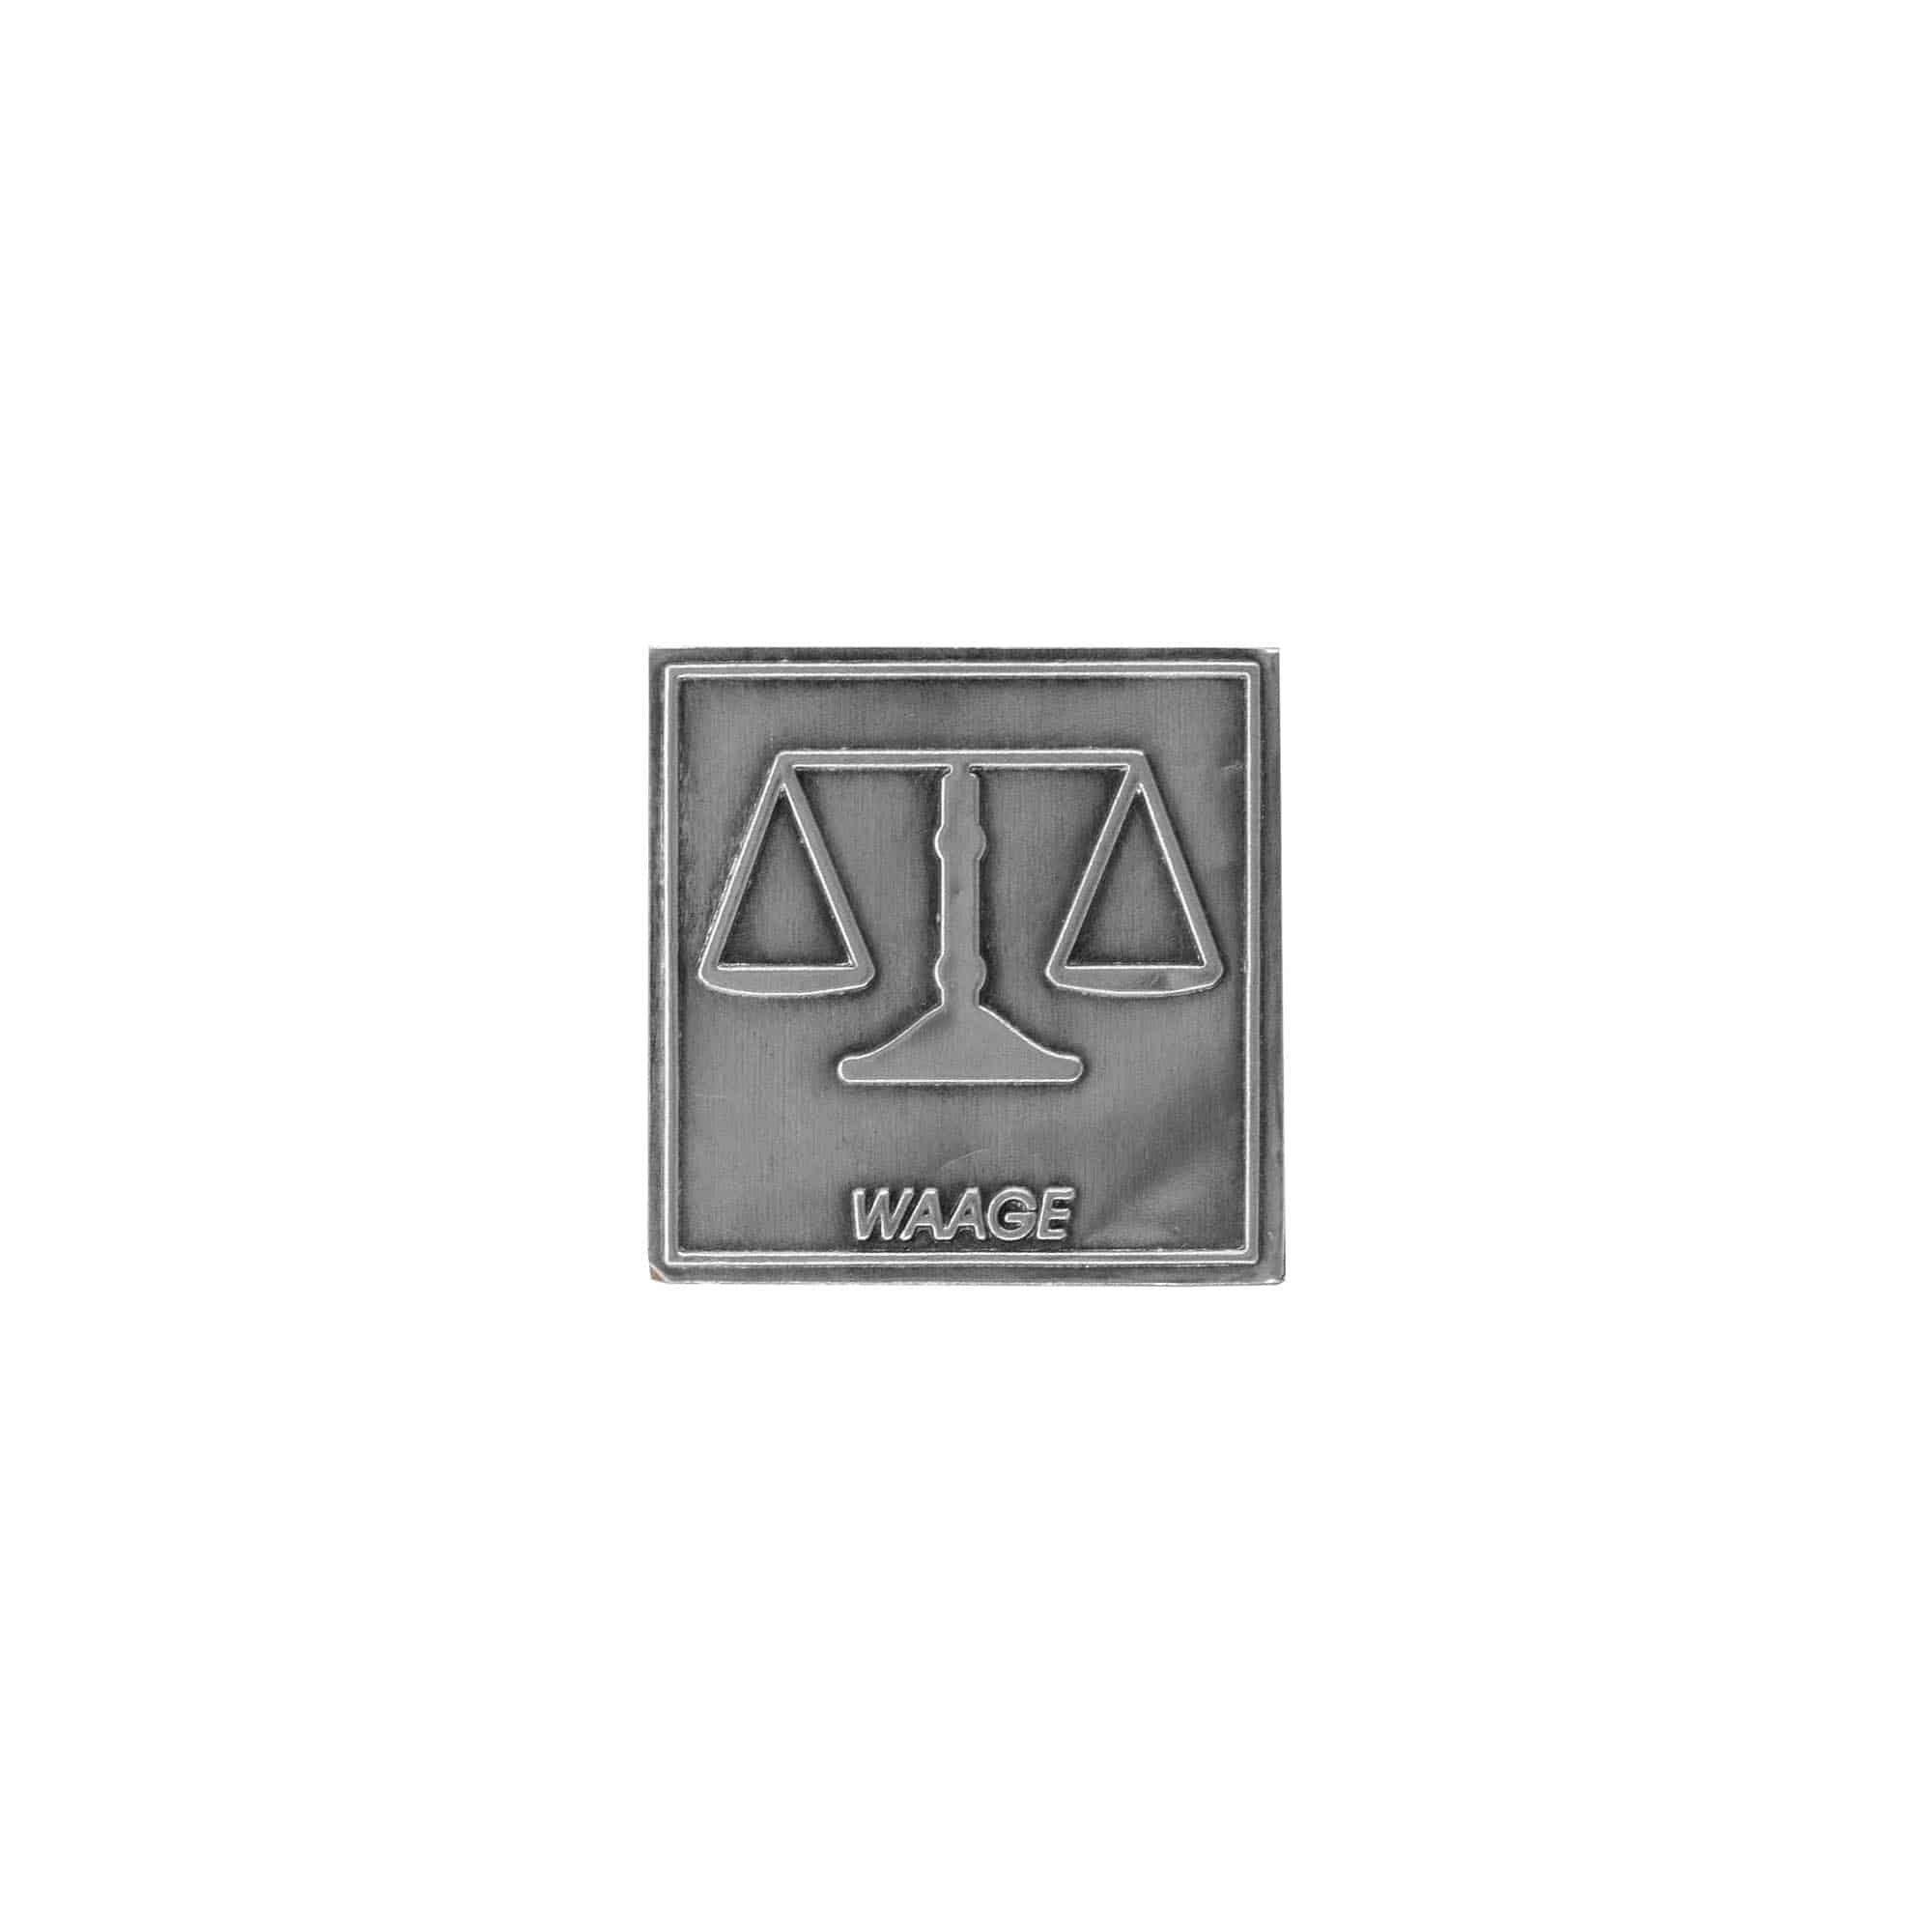 Etykieta cynowa 'Waga', kwadratowa, metal, kolor srebrny